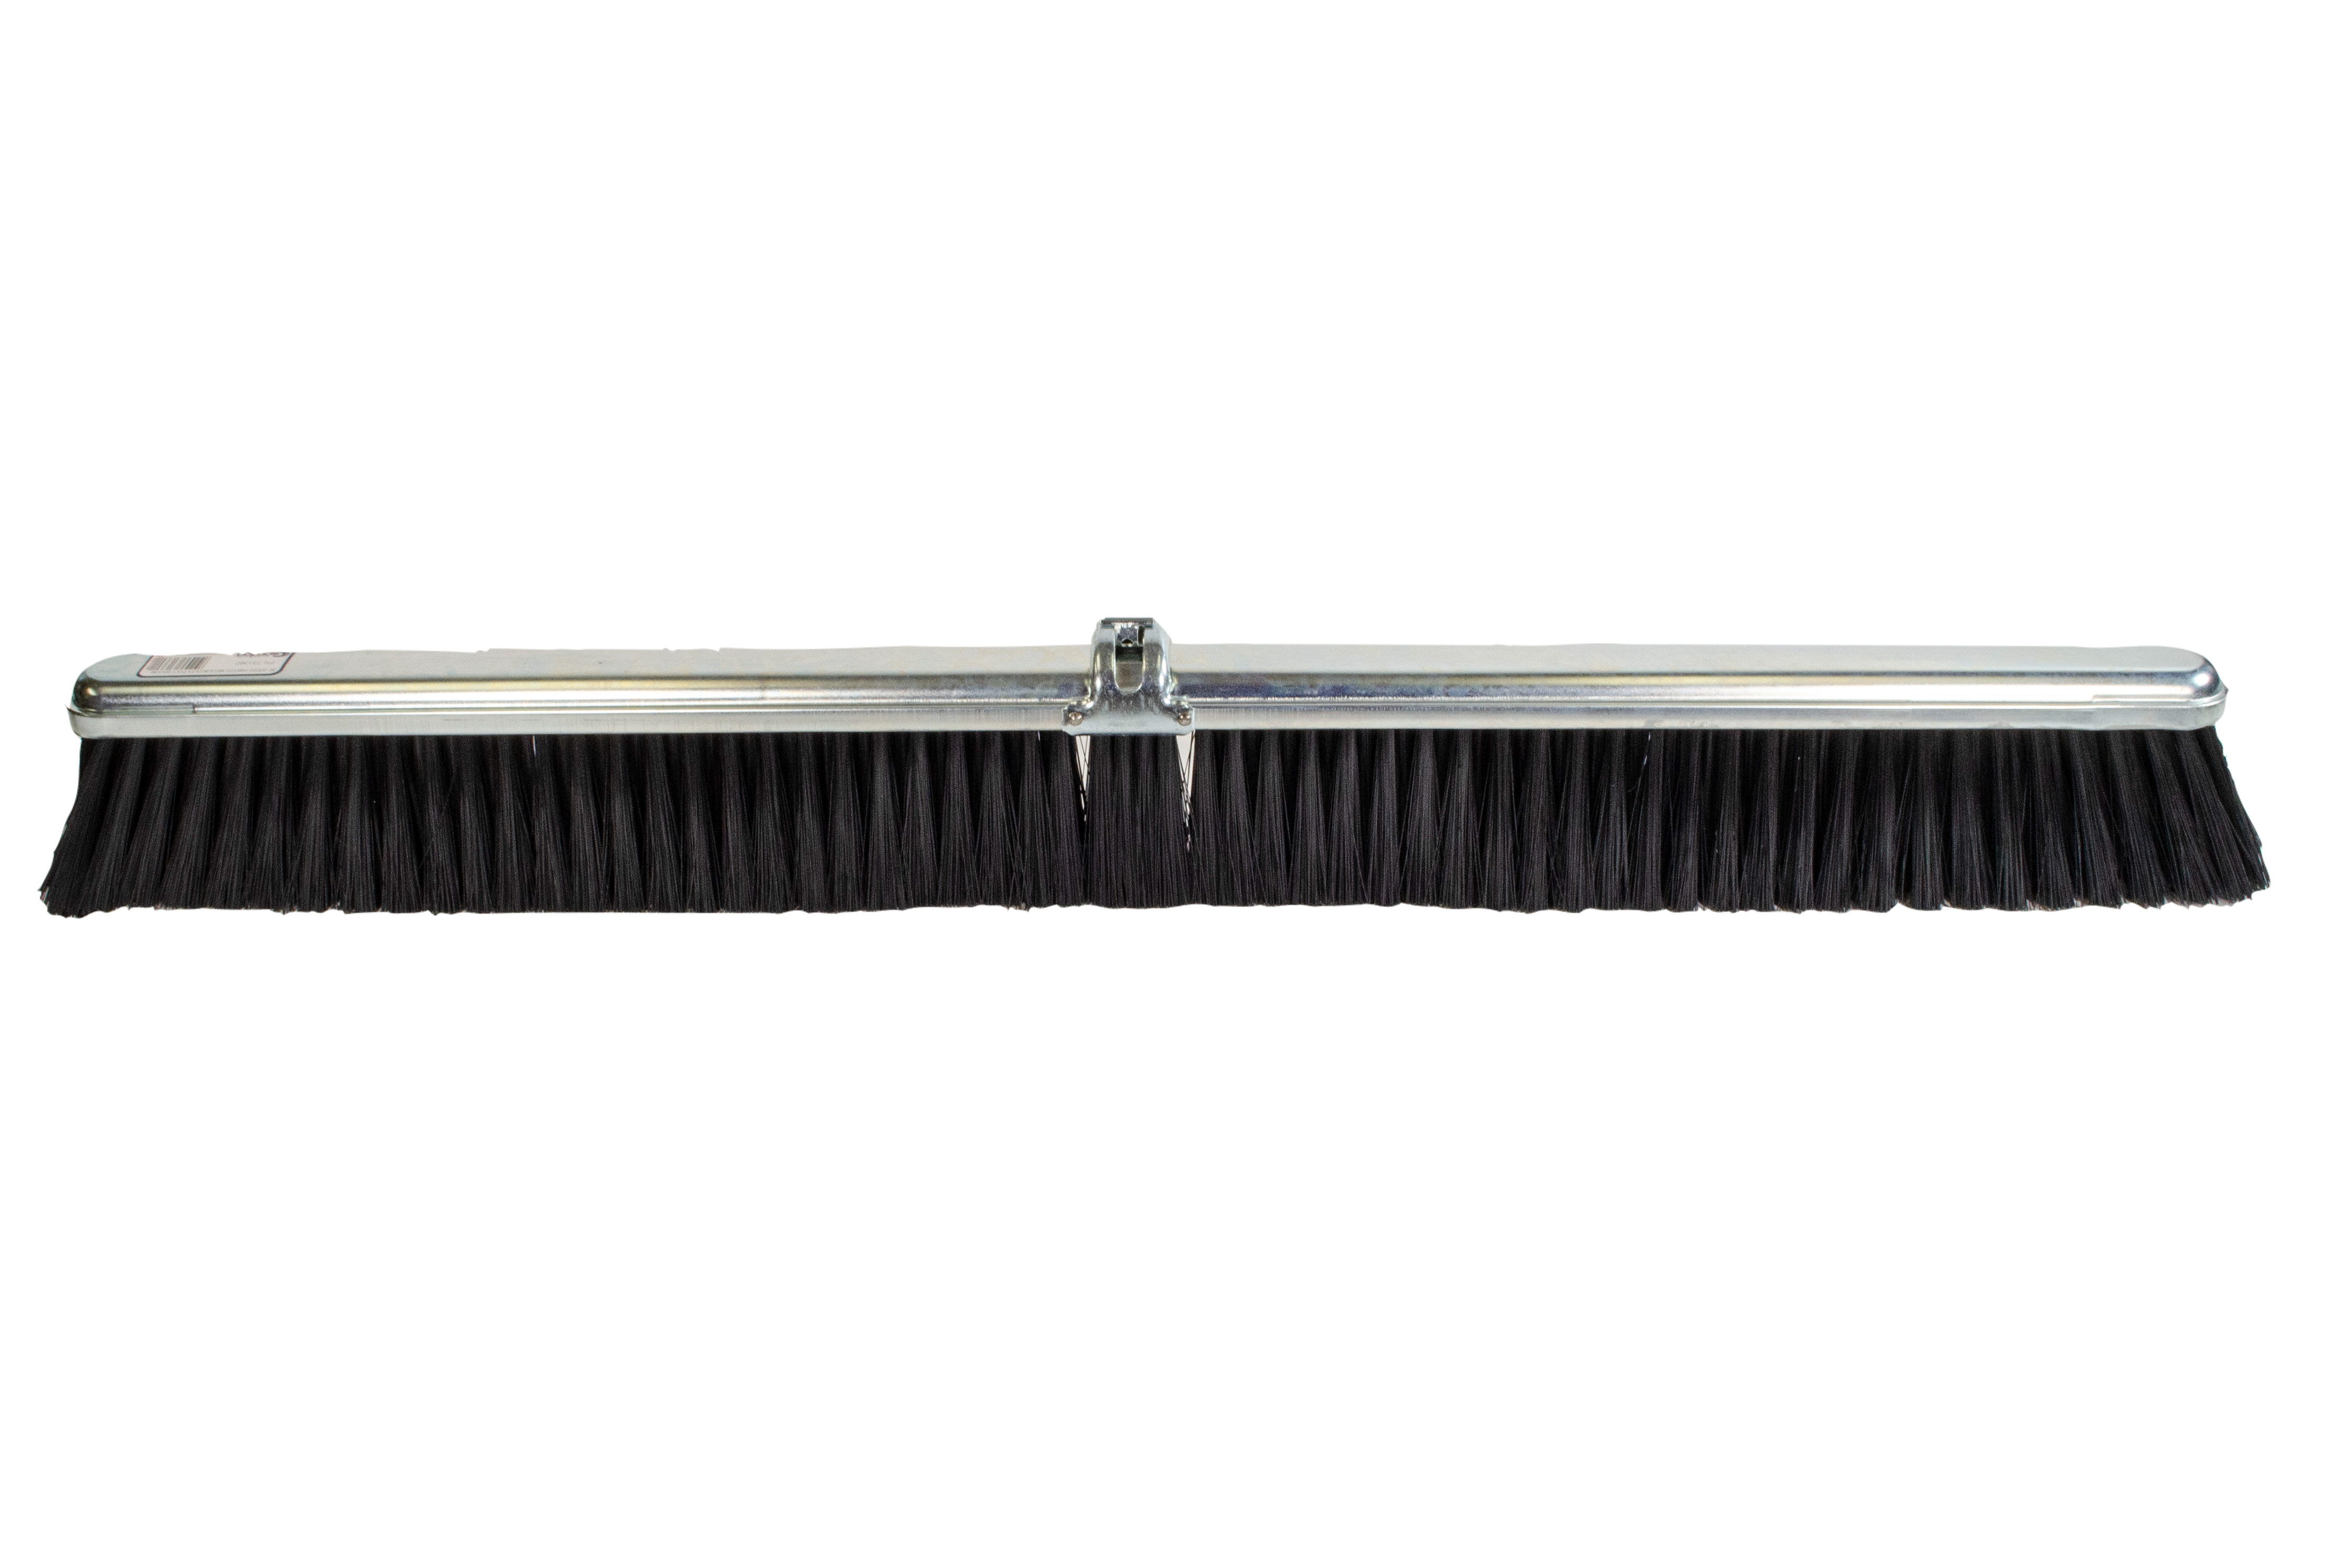 36" Medium Duty Polypropylene Metal Push Broom Brush - Black. ea